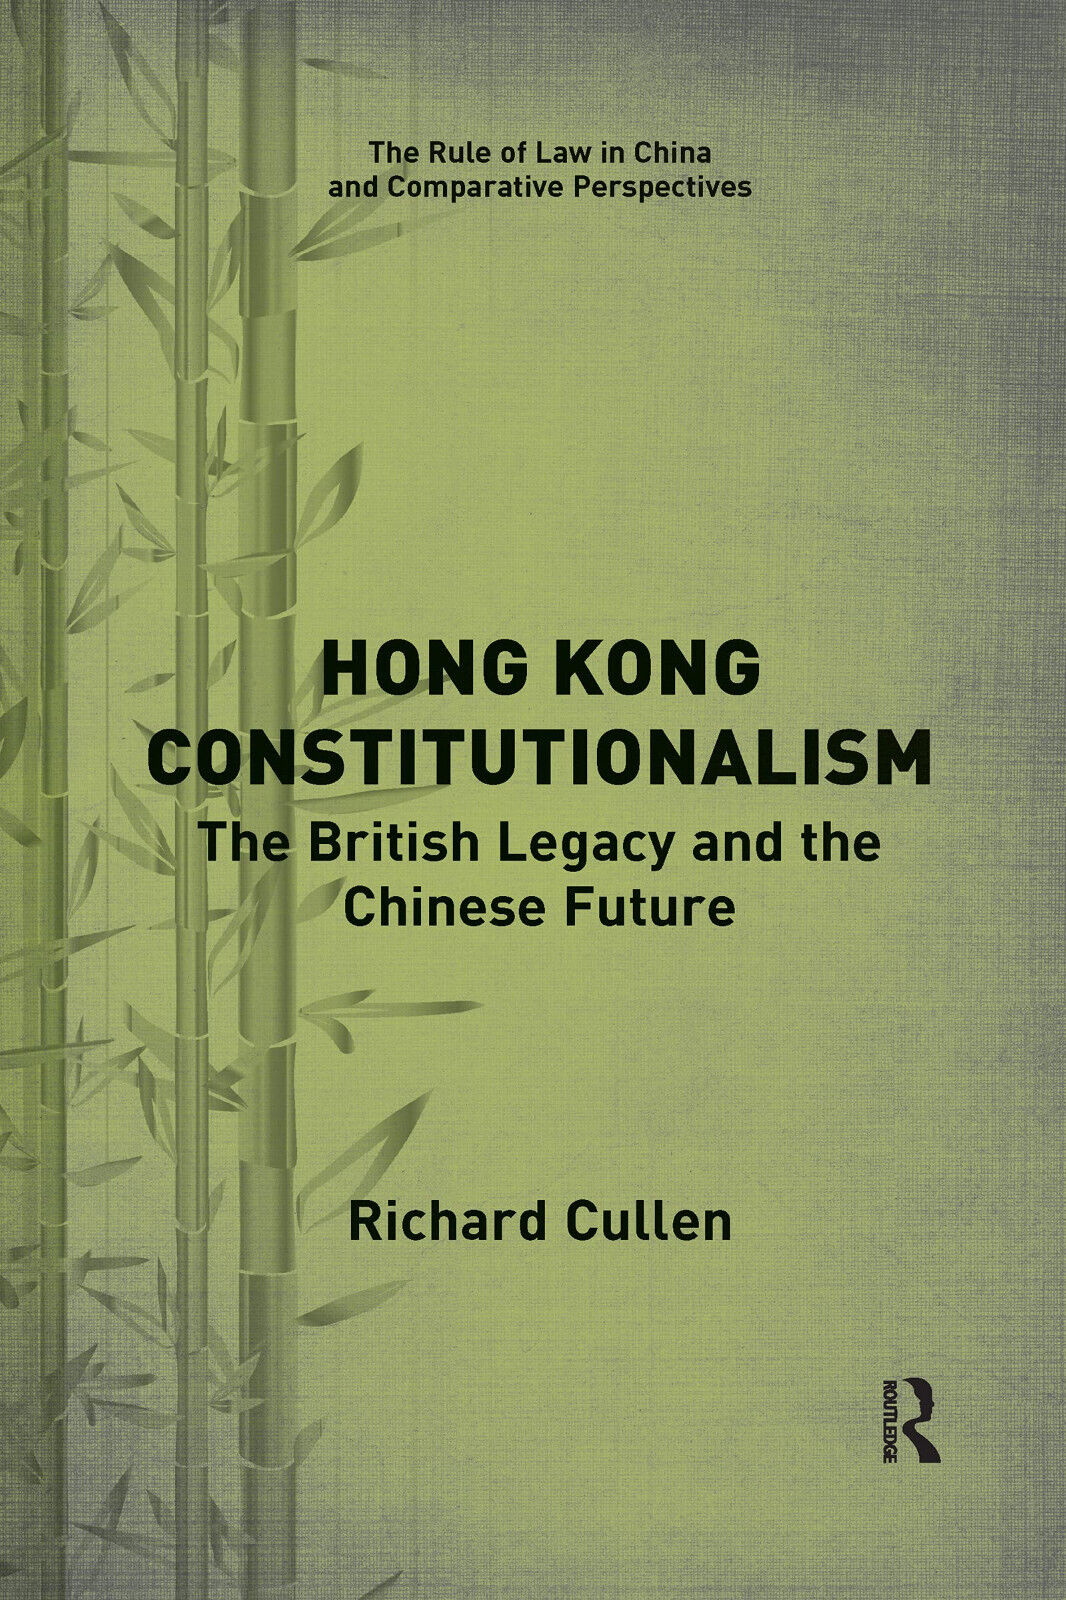 Hong Kong Constitutionalism - Richard Cullen - Taylor & Francis Ltd, 2021